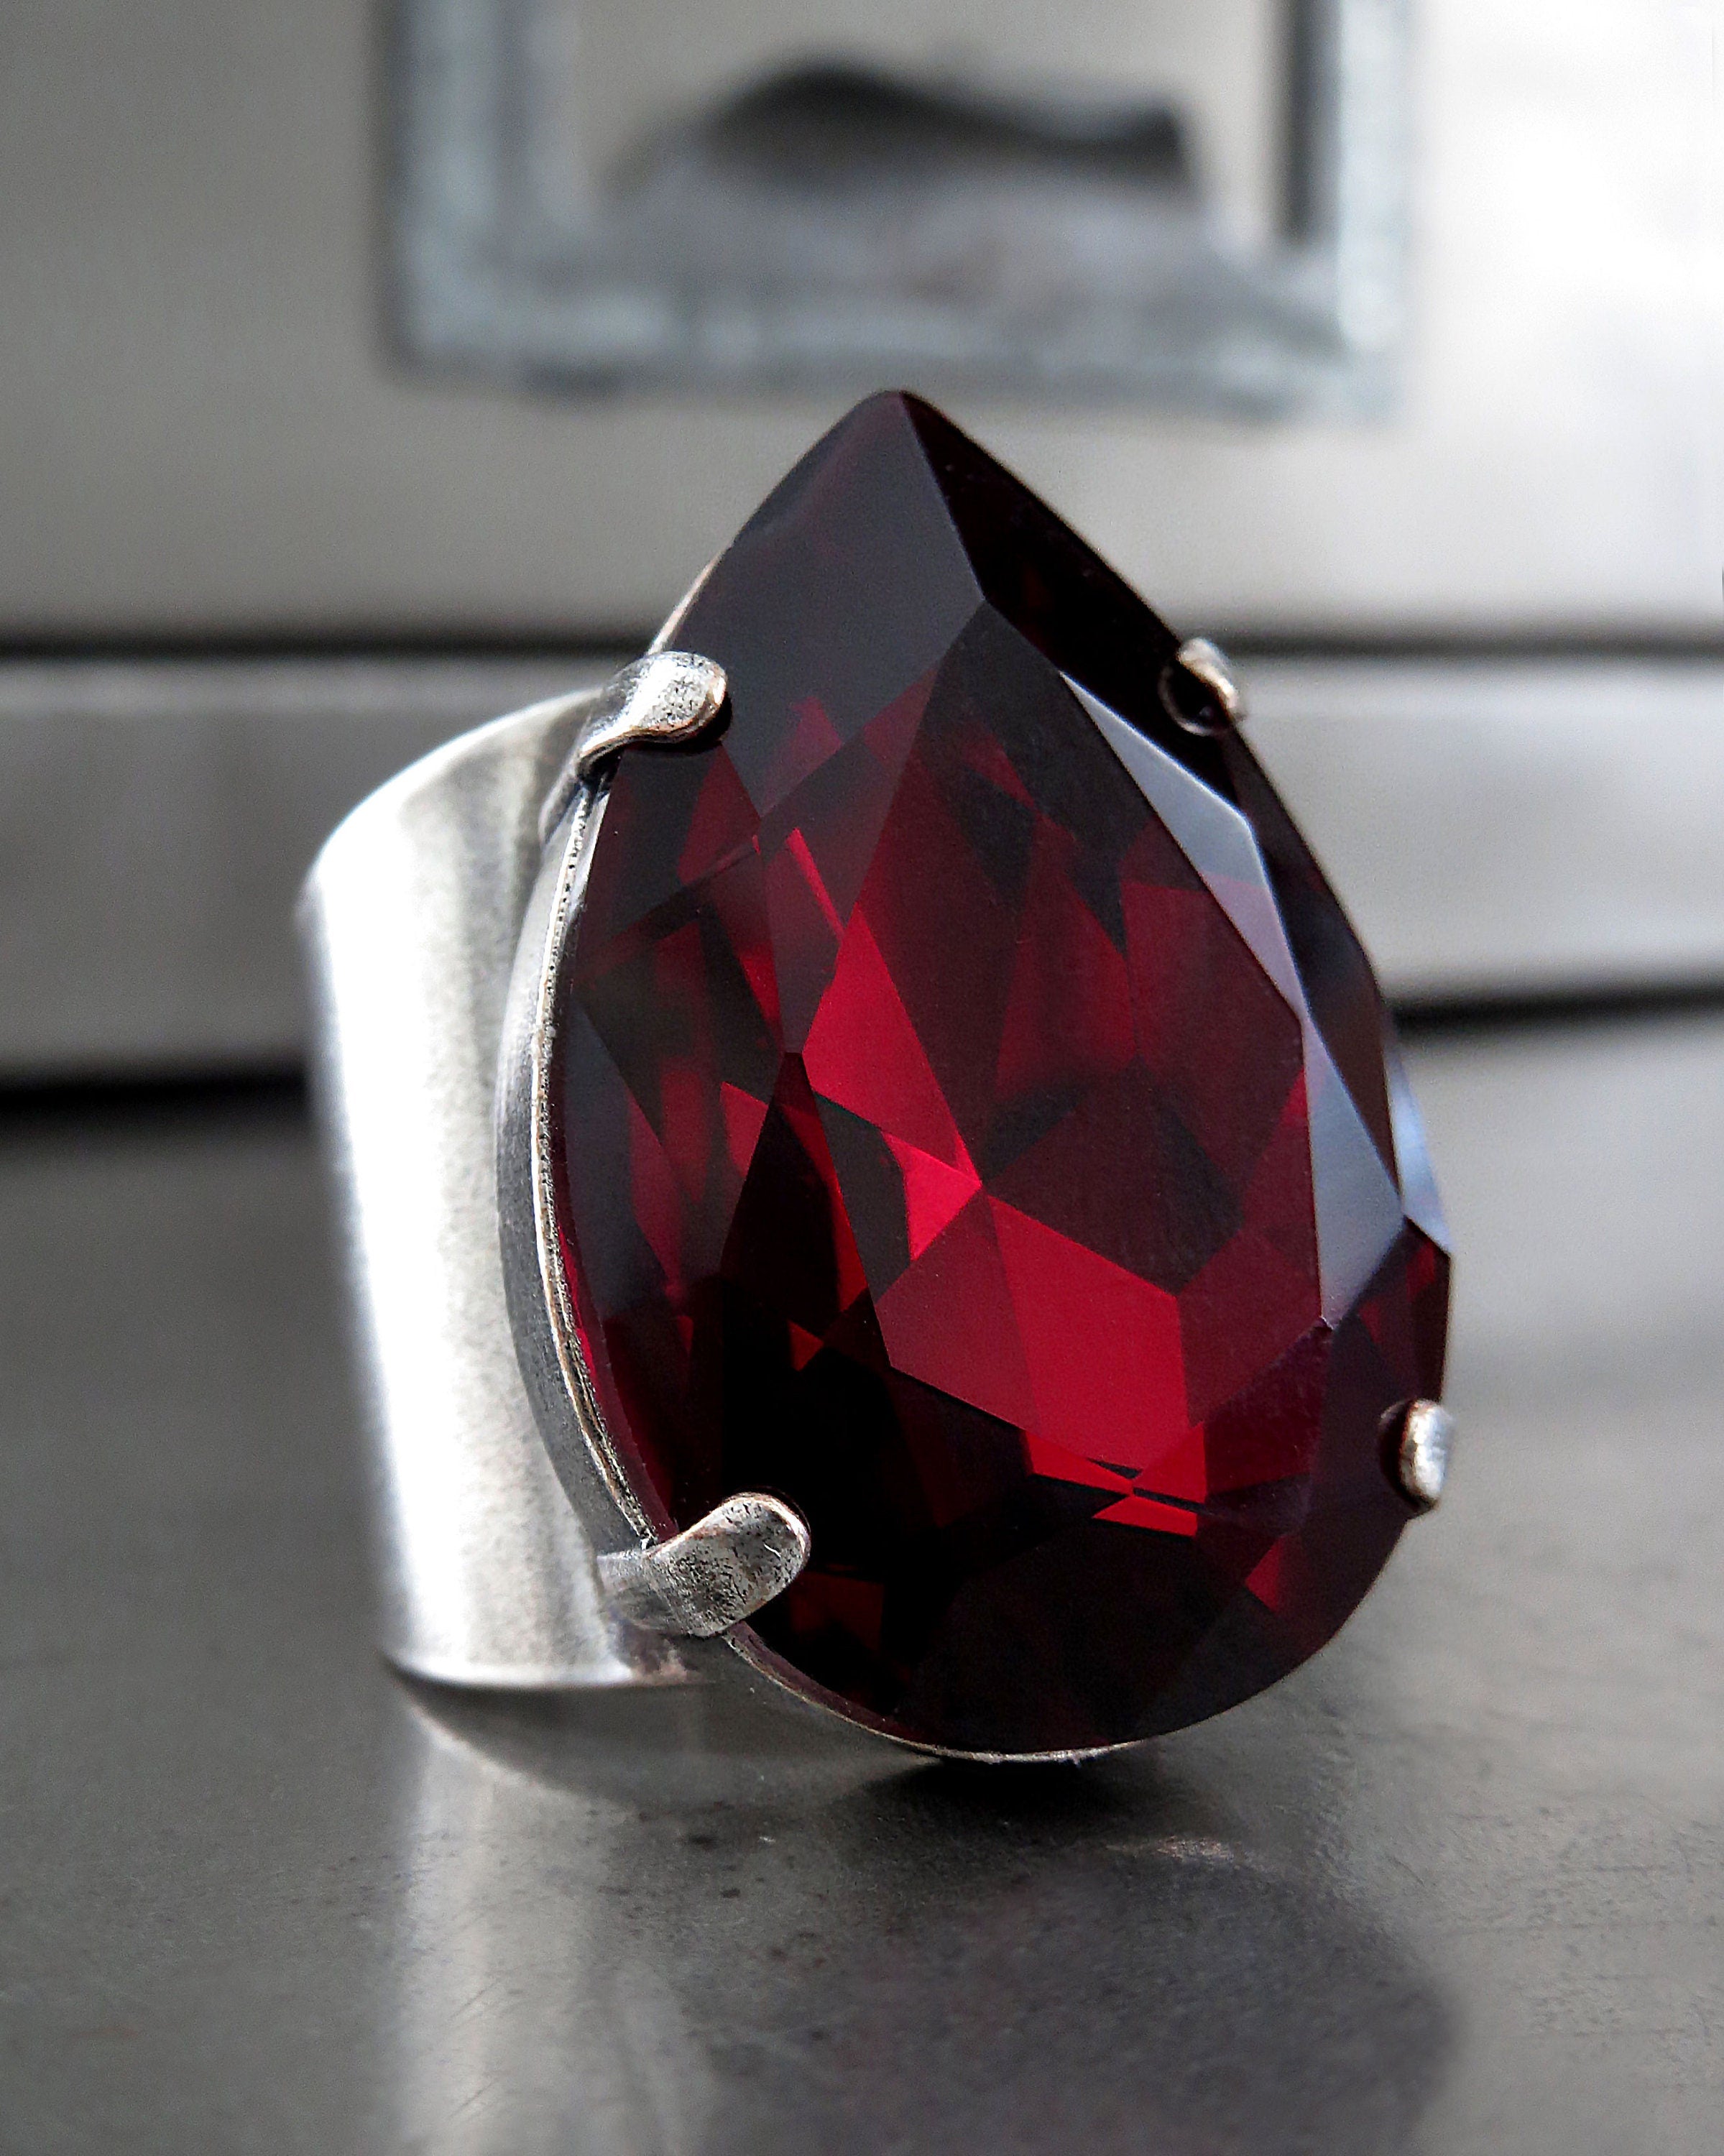 Teardrop Pink Sapphire Diamond Solid 14KG Engagement Ring